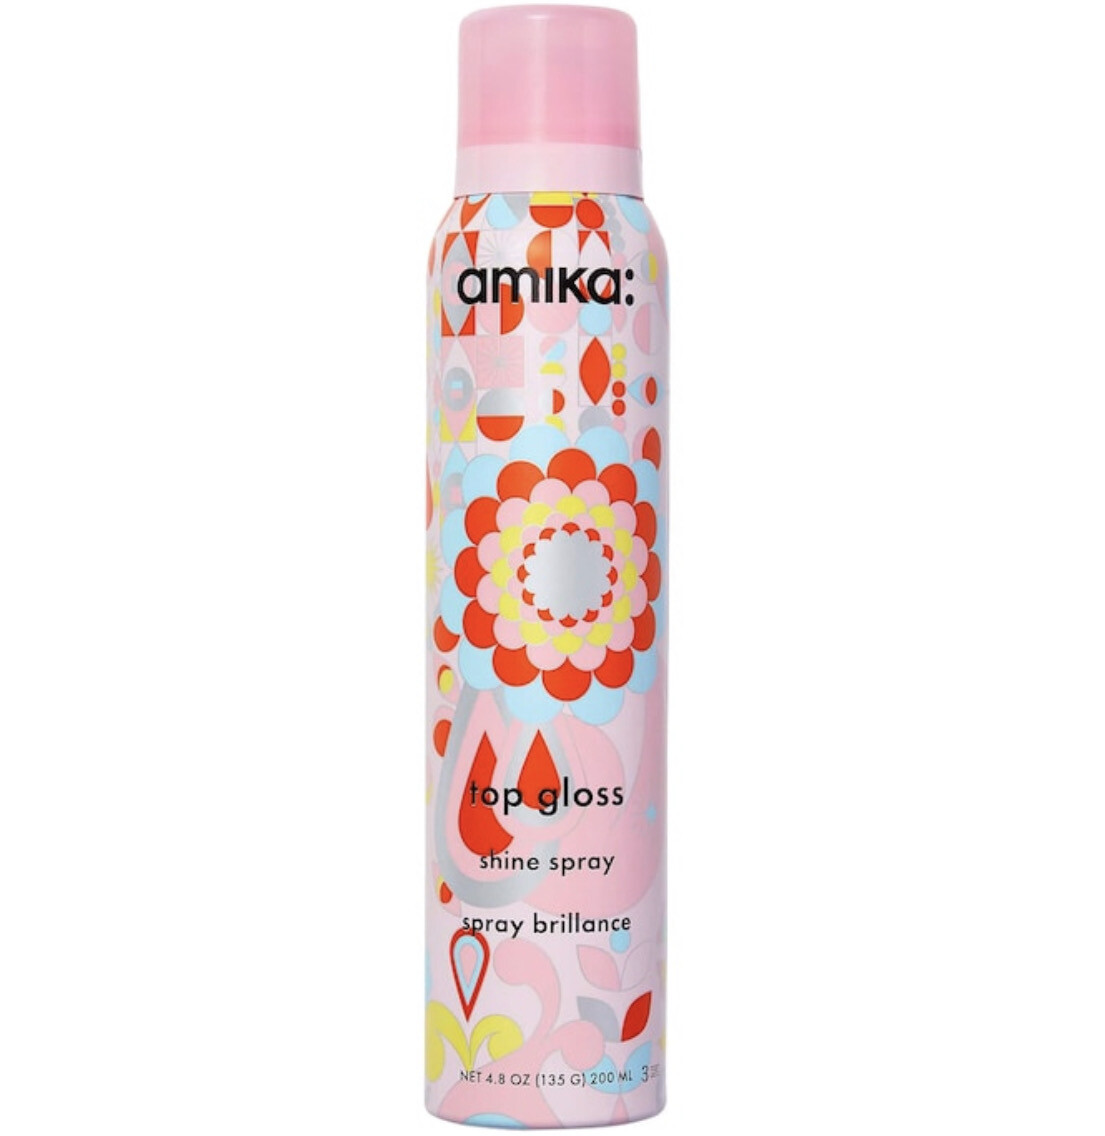 amika - Top Gloss Hair Shine Spray